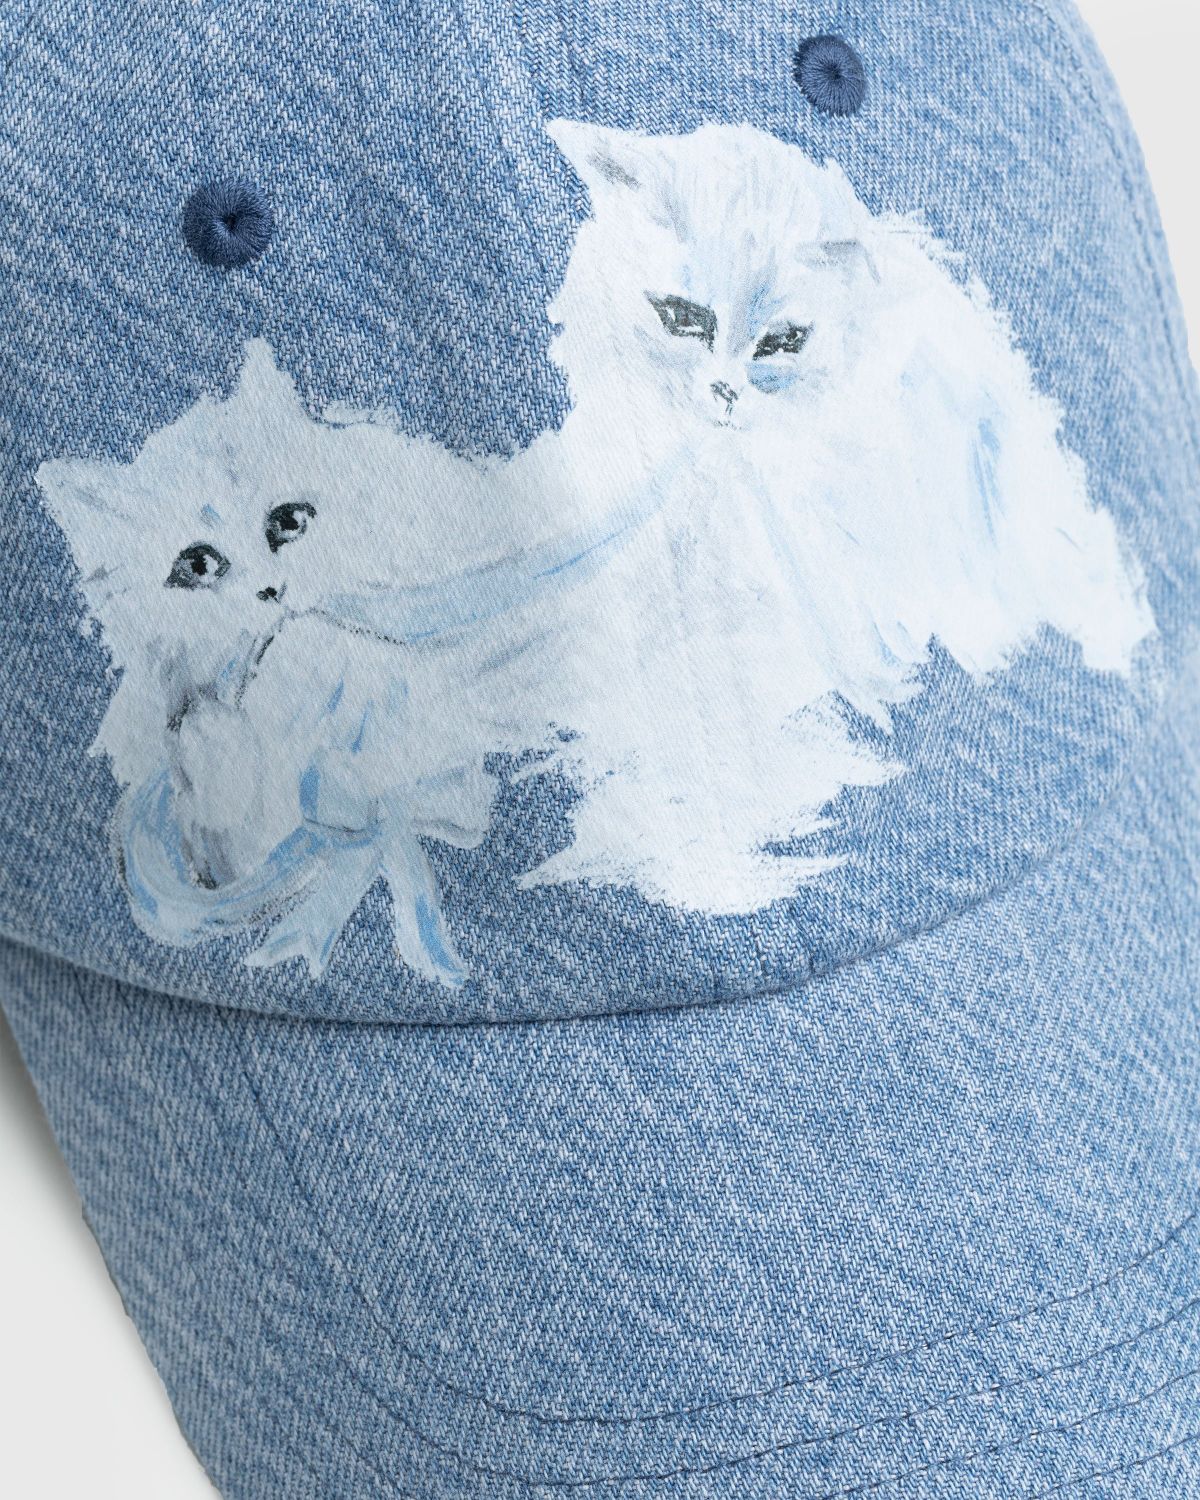 Acne Studios – Cat Print Denim Cap Blue - Hats - Blue - Image 4